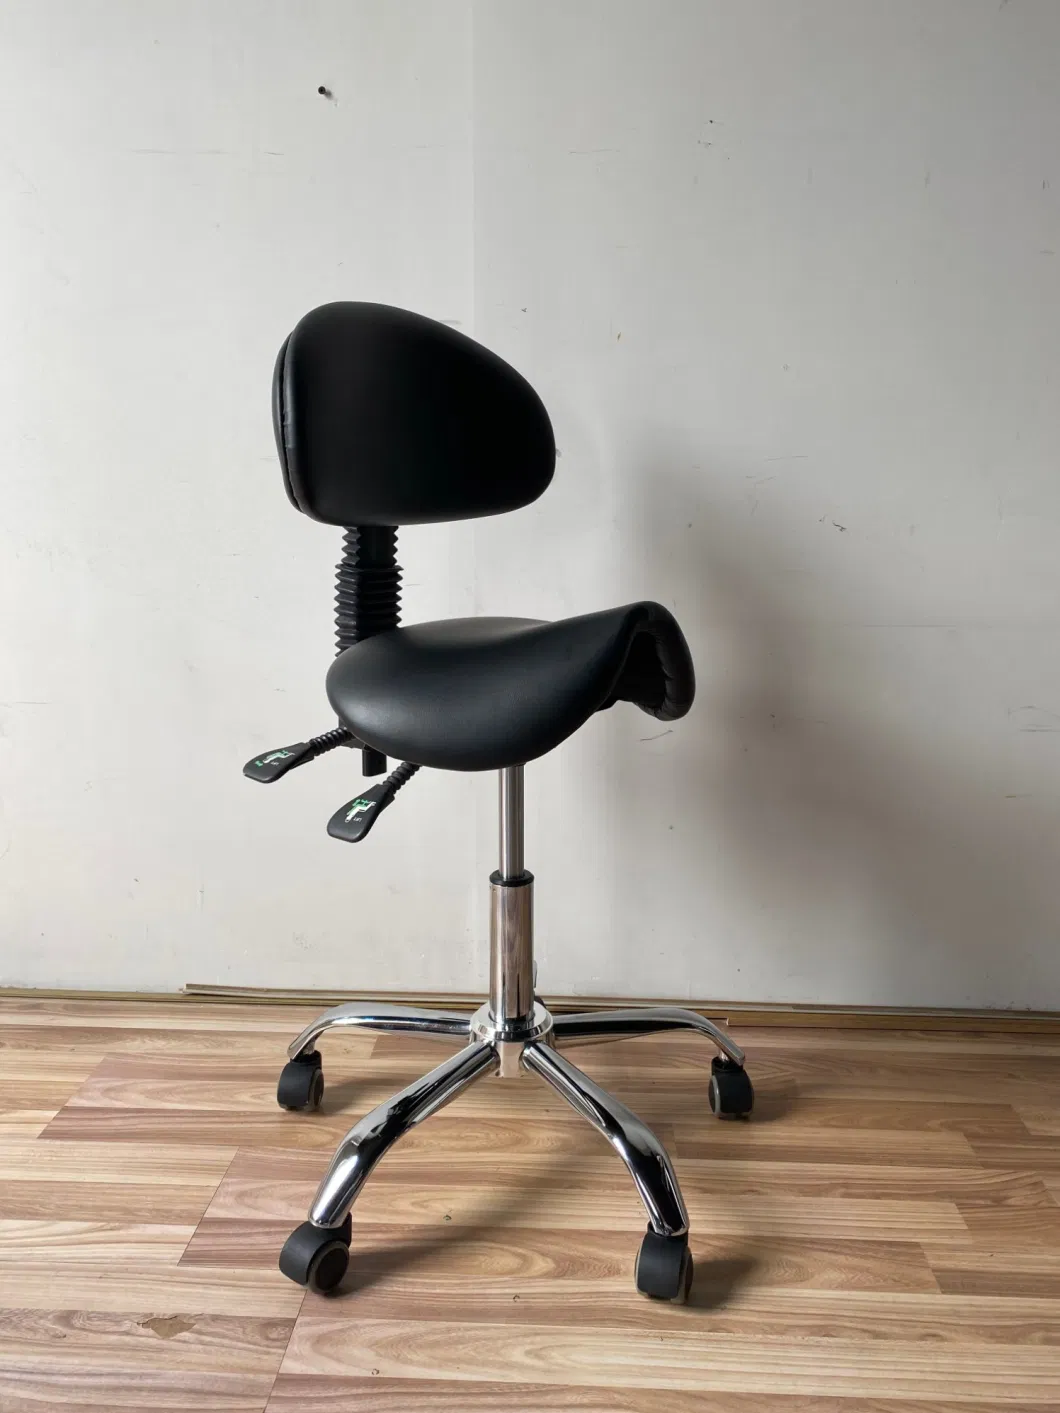 Ergonomic Saddle Seat Medical Dental Chair Stool with Backrest